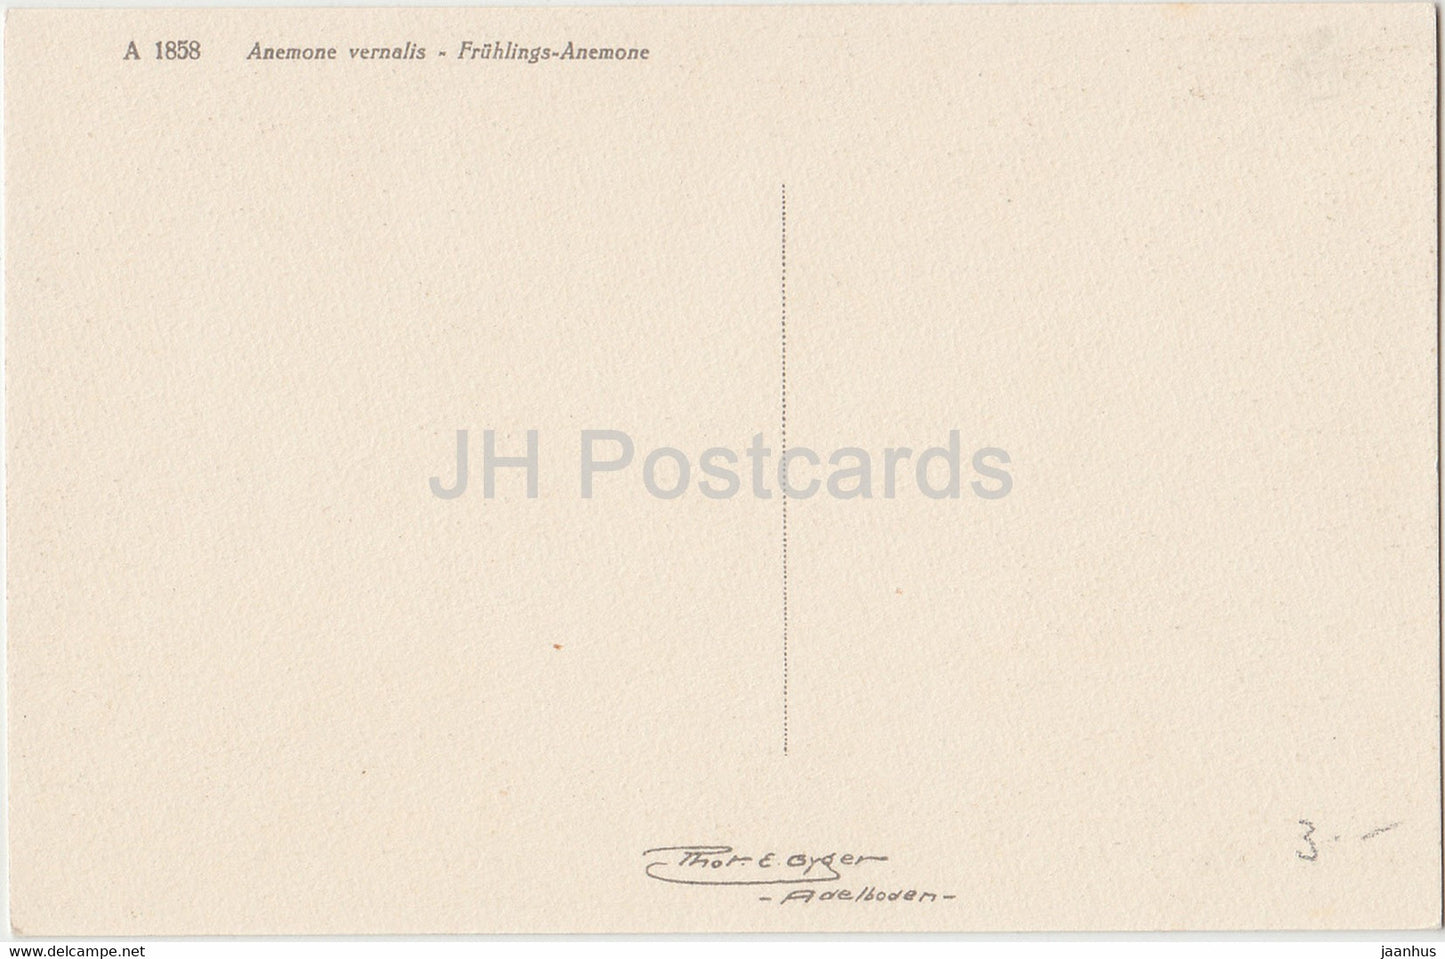 Anemone vernalis - Fruhlings Anemone - fleurs - 1858 - carte postale ancienne - Suisse - inutilisée